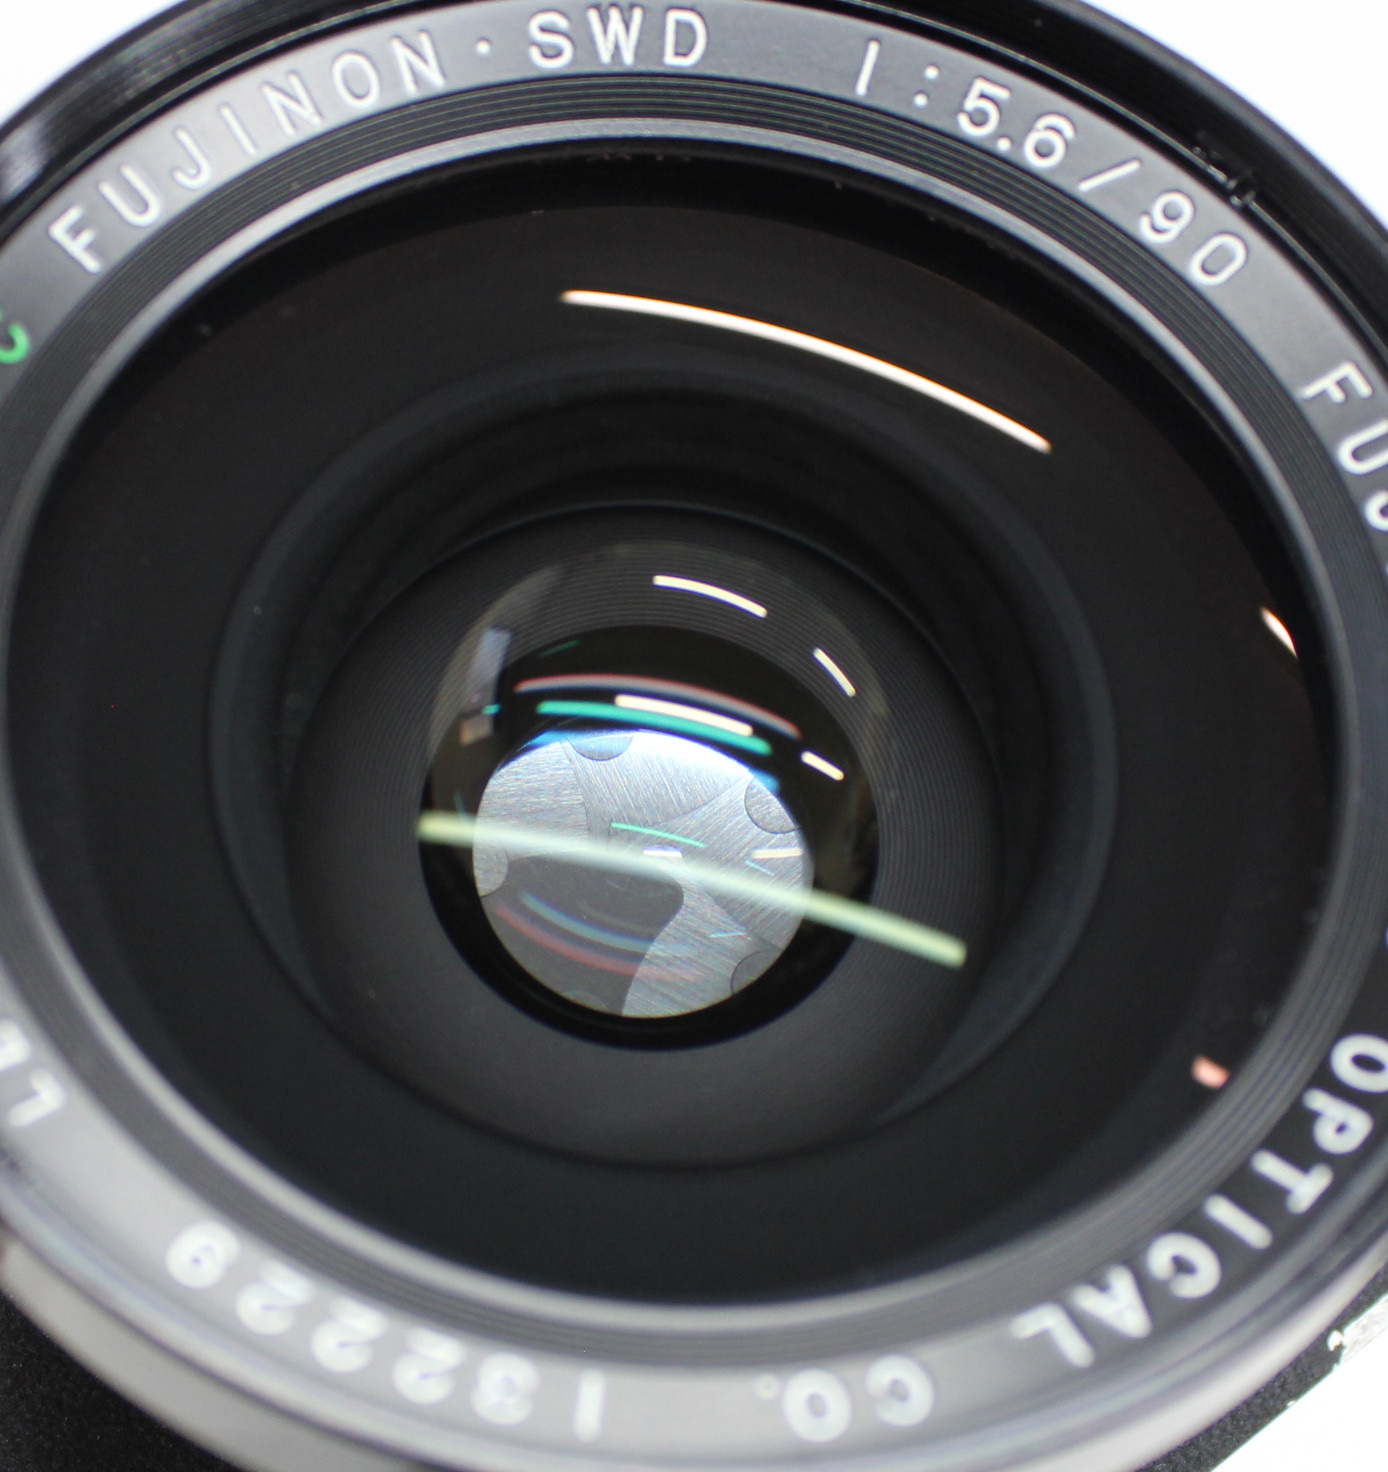 Fuji EBC Fujinon SWD 90mm F/5.6 4x5 Large Format Lens with Seiko 